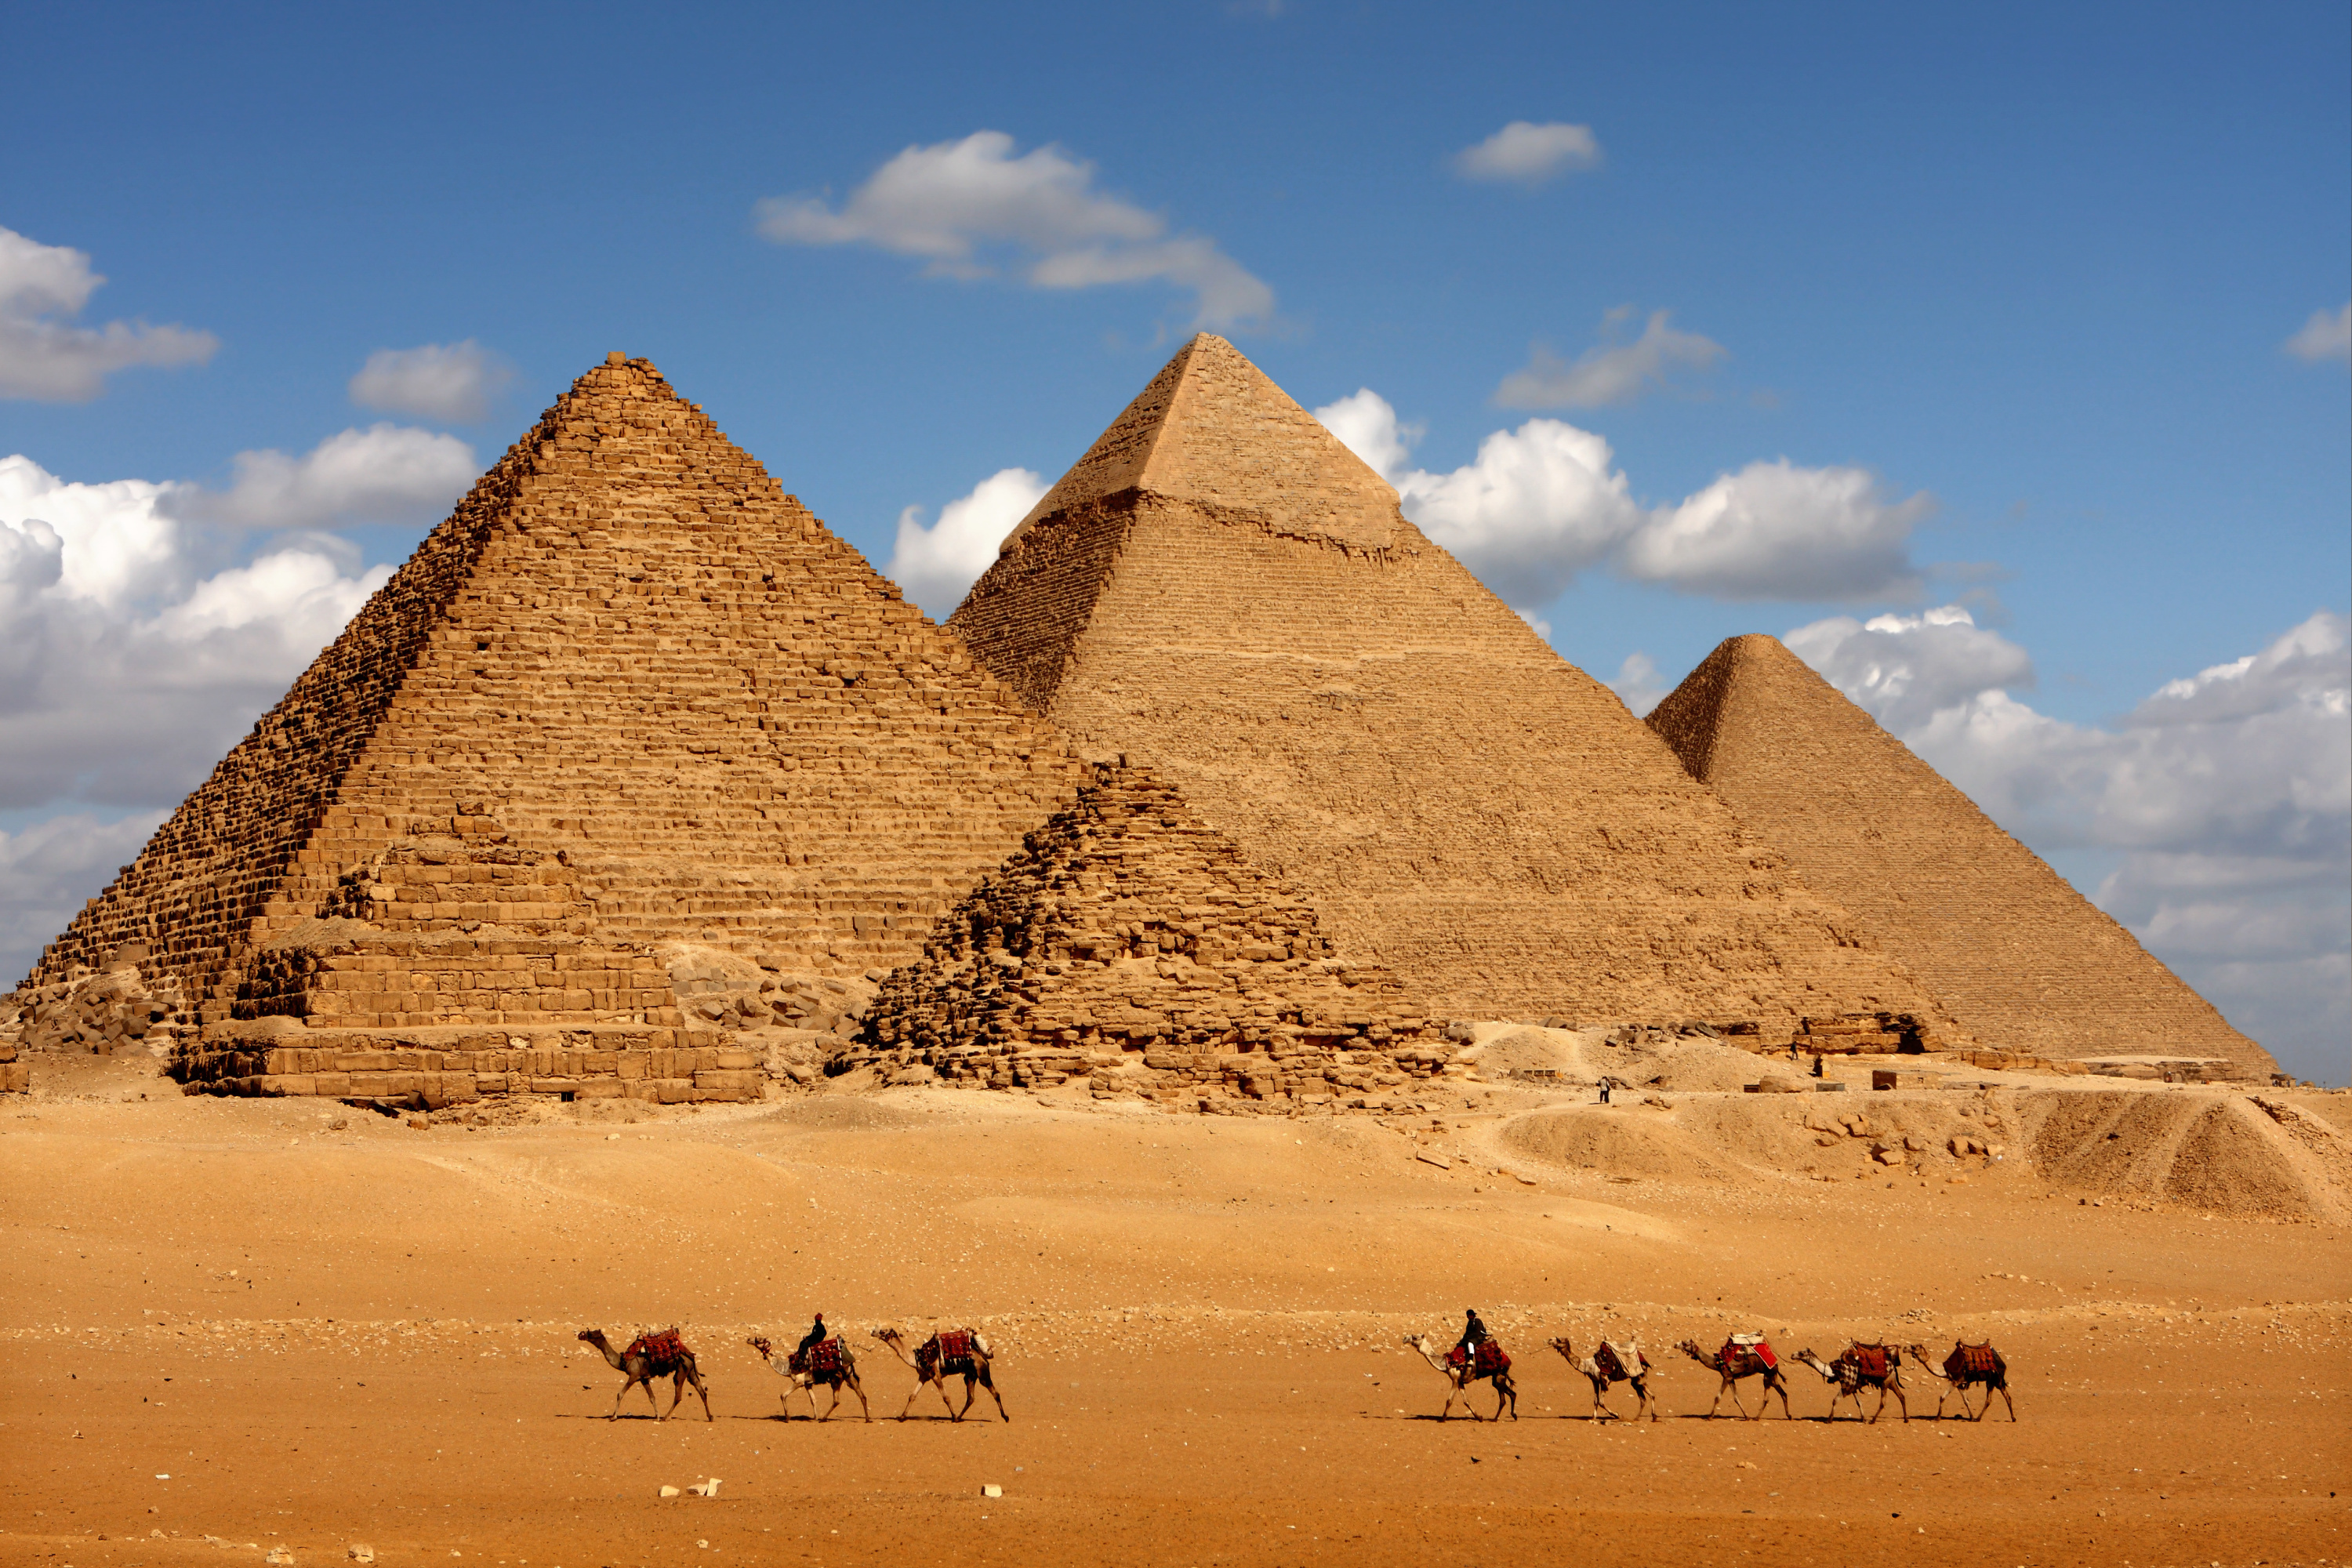 Pyramide voyage international